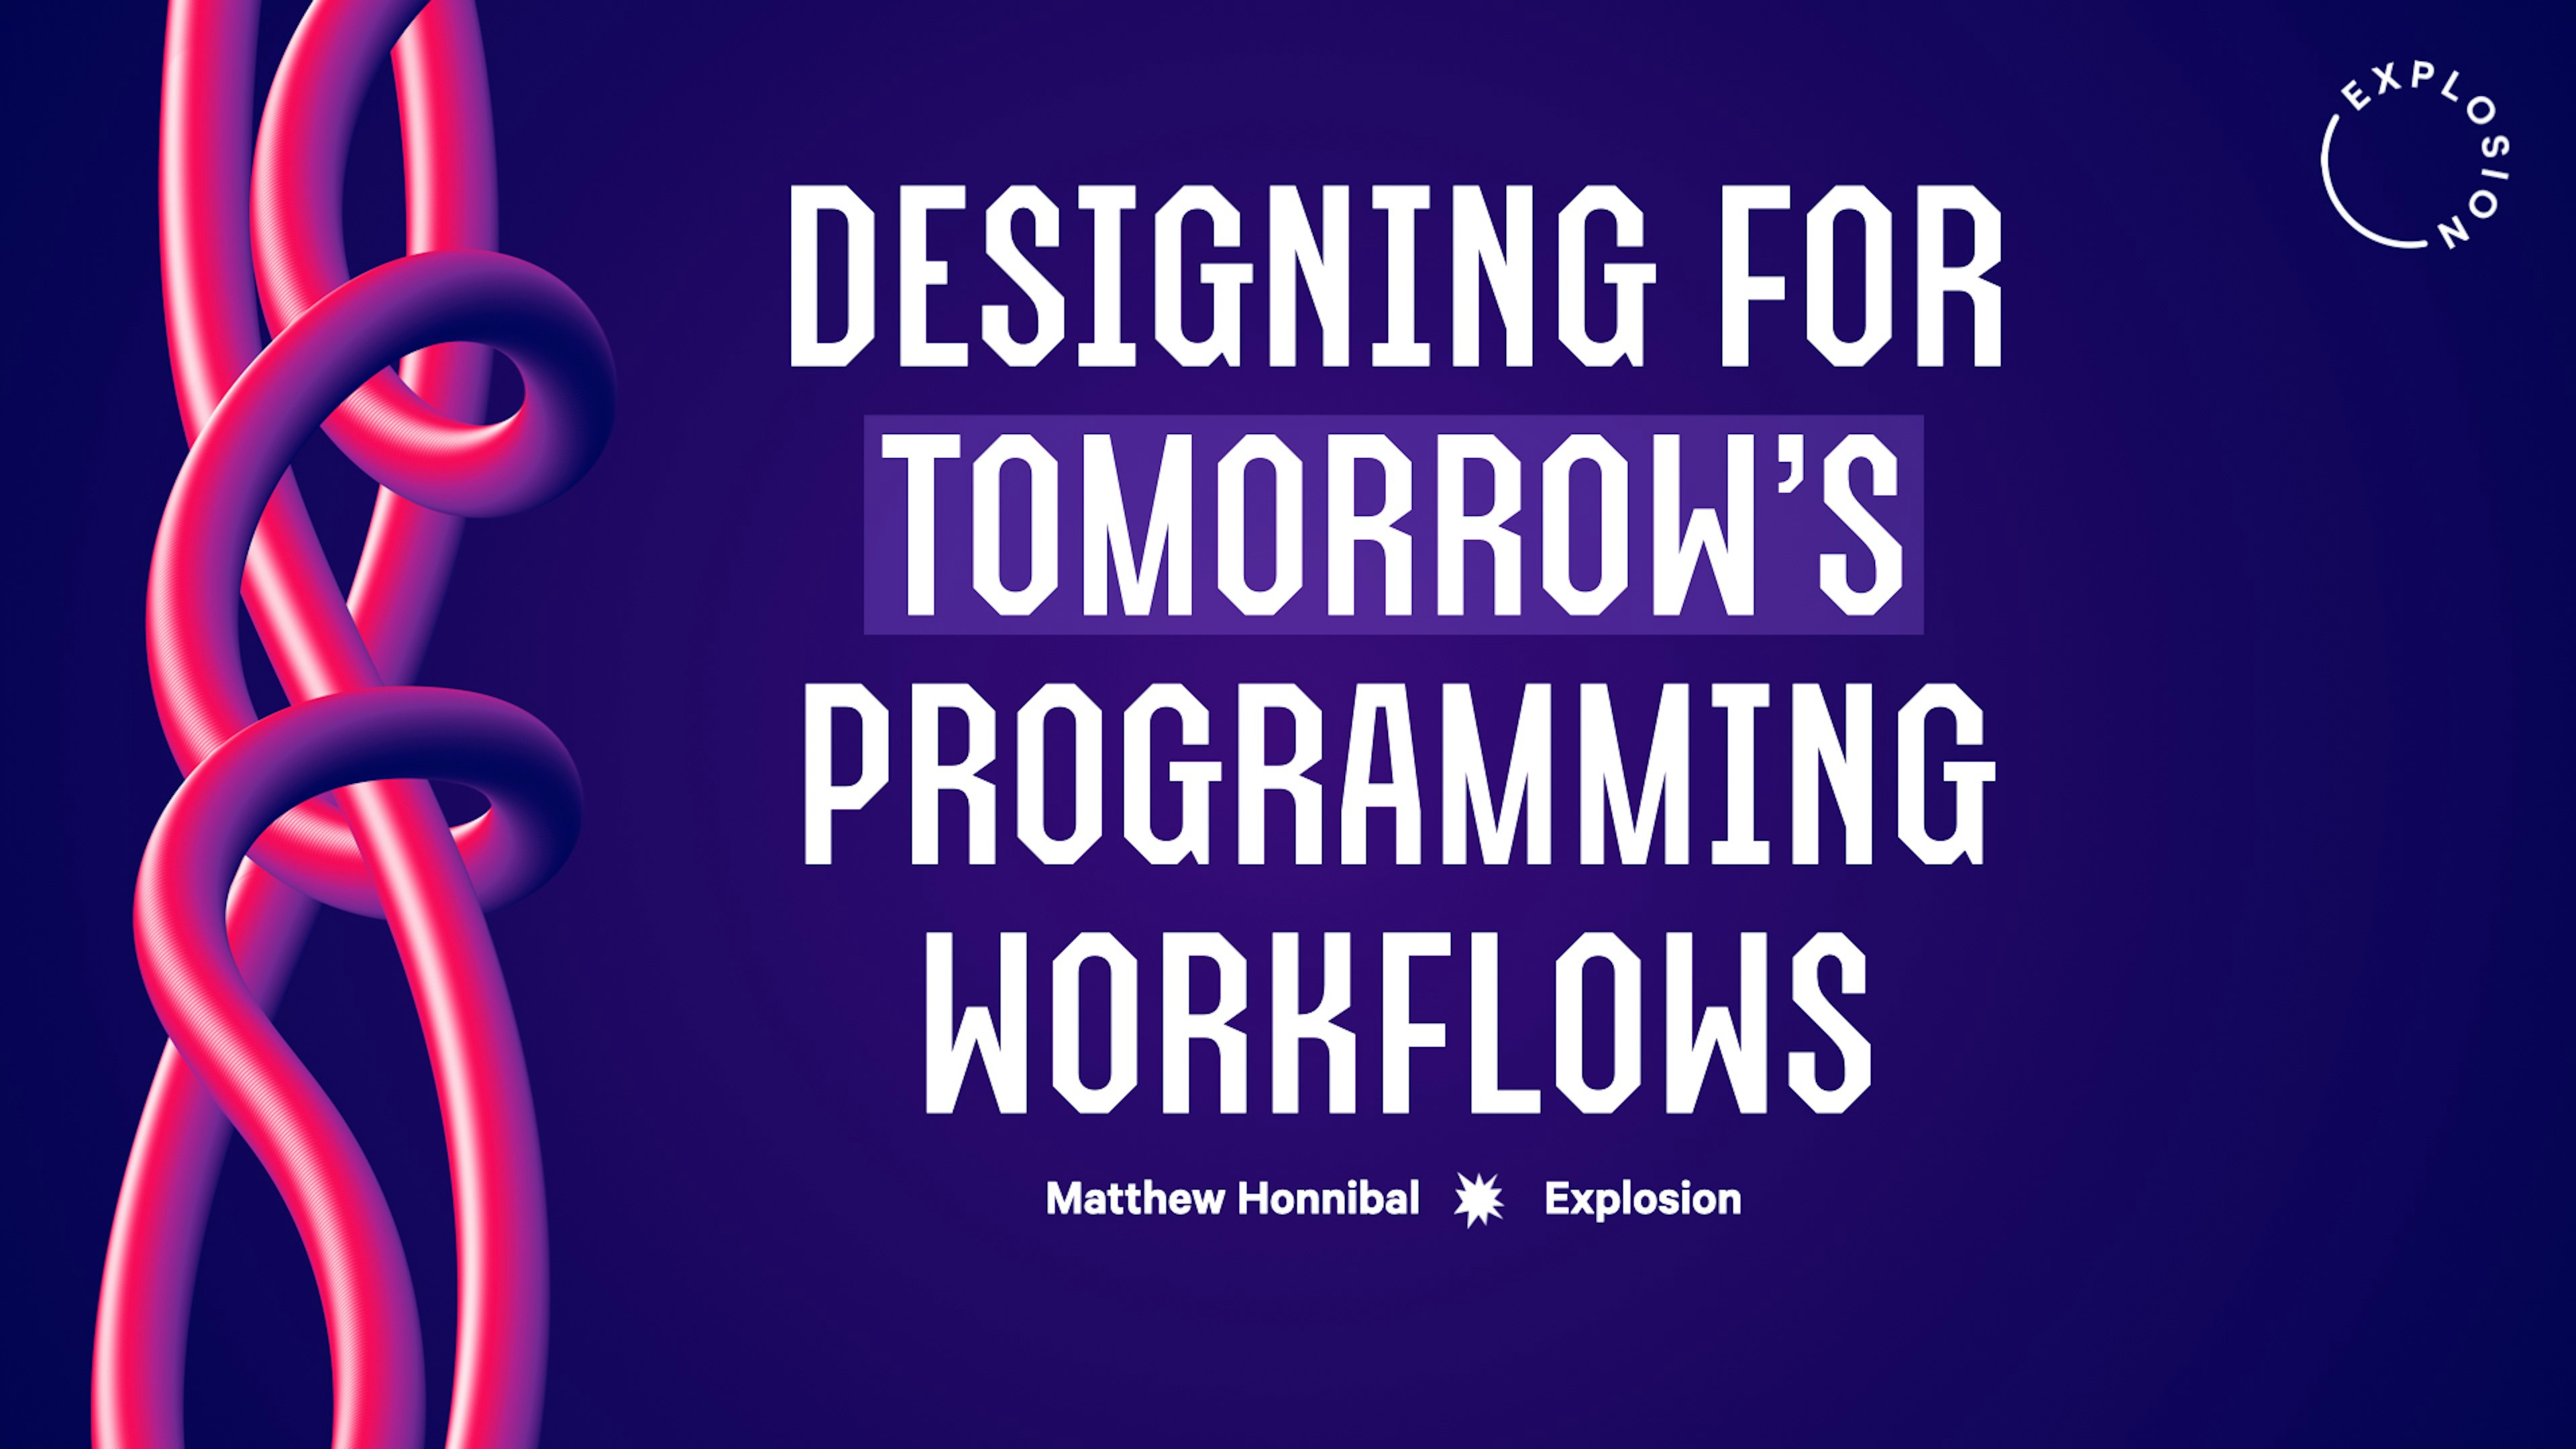 Designing for tomorrow’s programming workflows